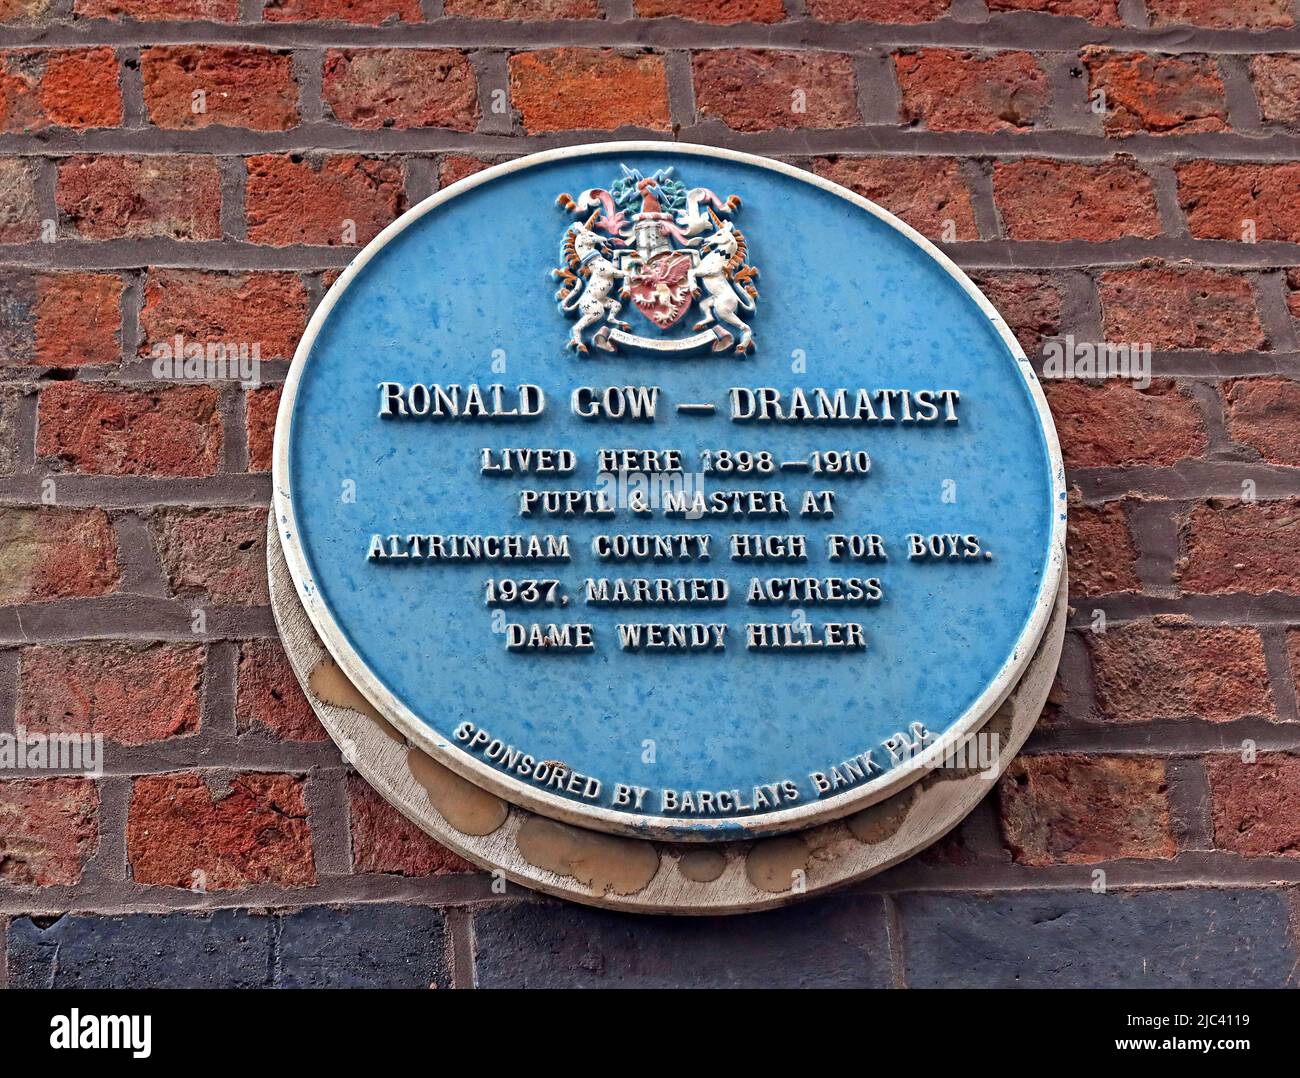 Ronald Gow dramatist 1898-1910, plaque bleue, mariée actrice Dame Wendy Hiller, Altrincham, Cheshire, Angleterre, WA14 Banque D'Images